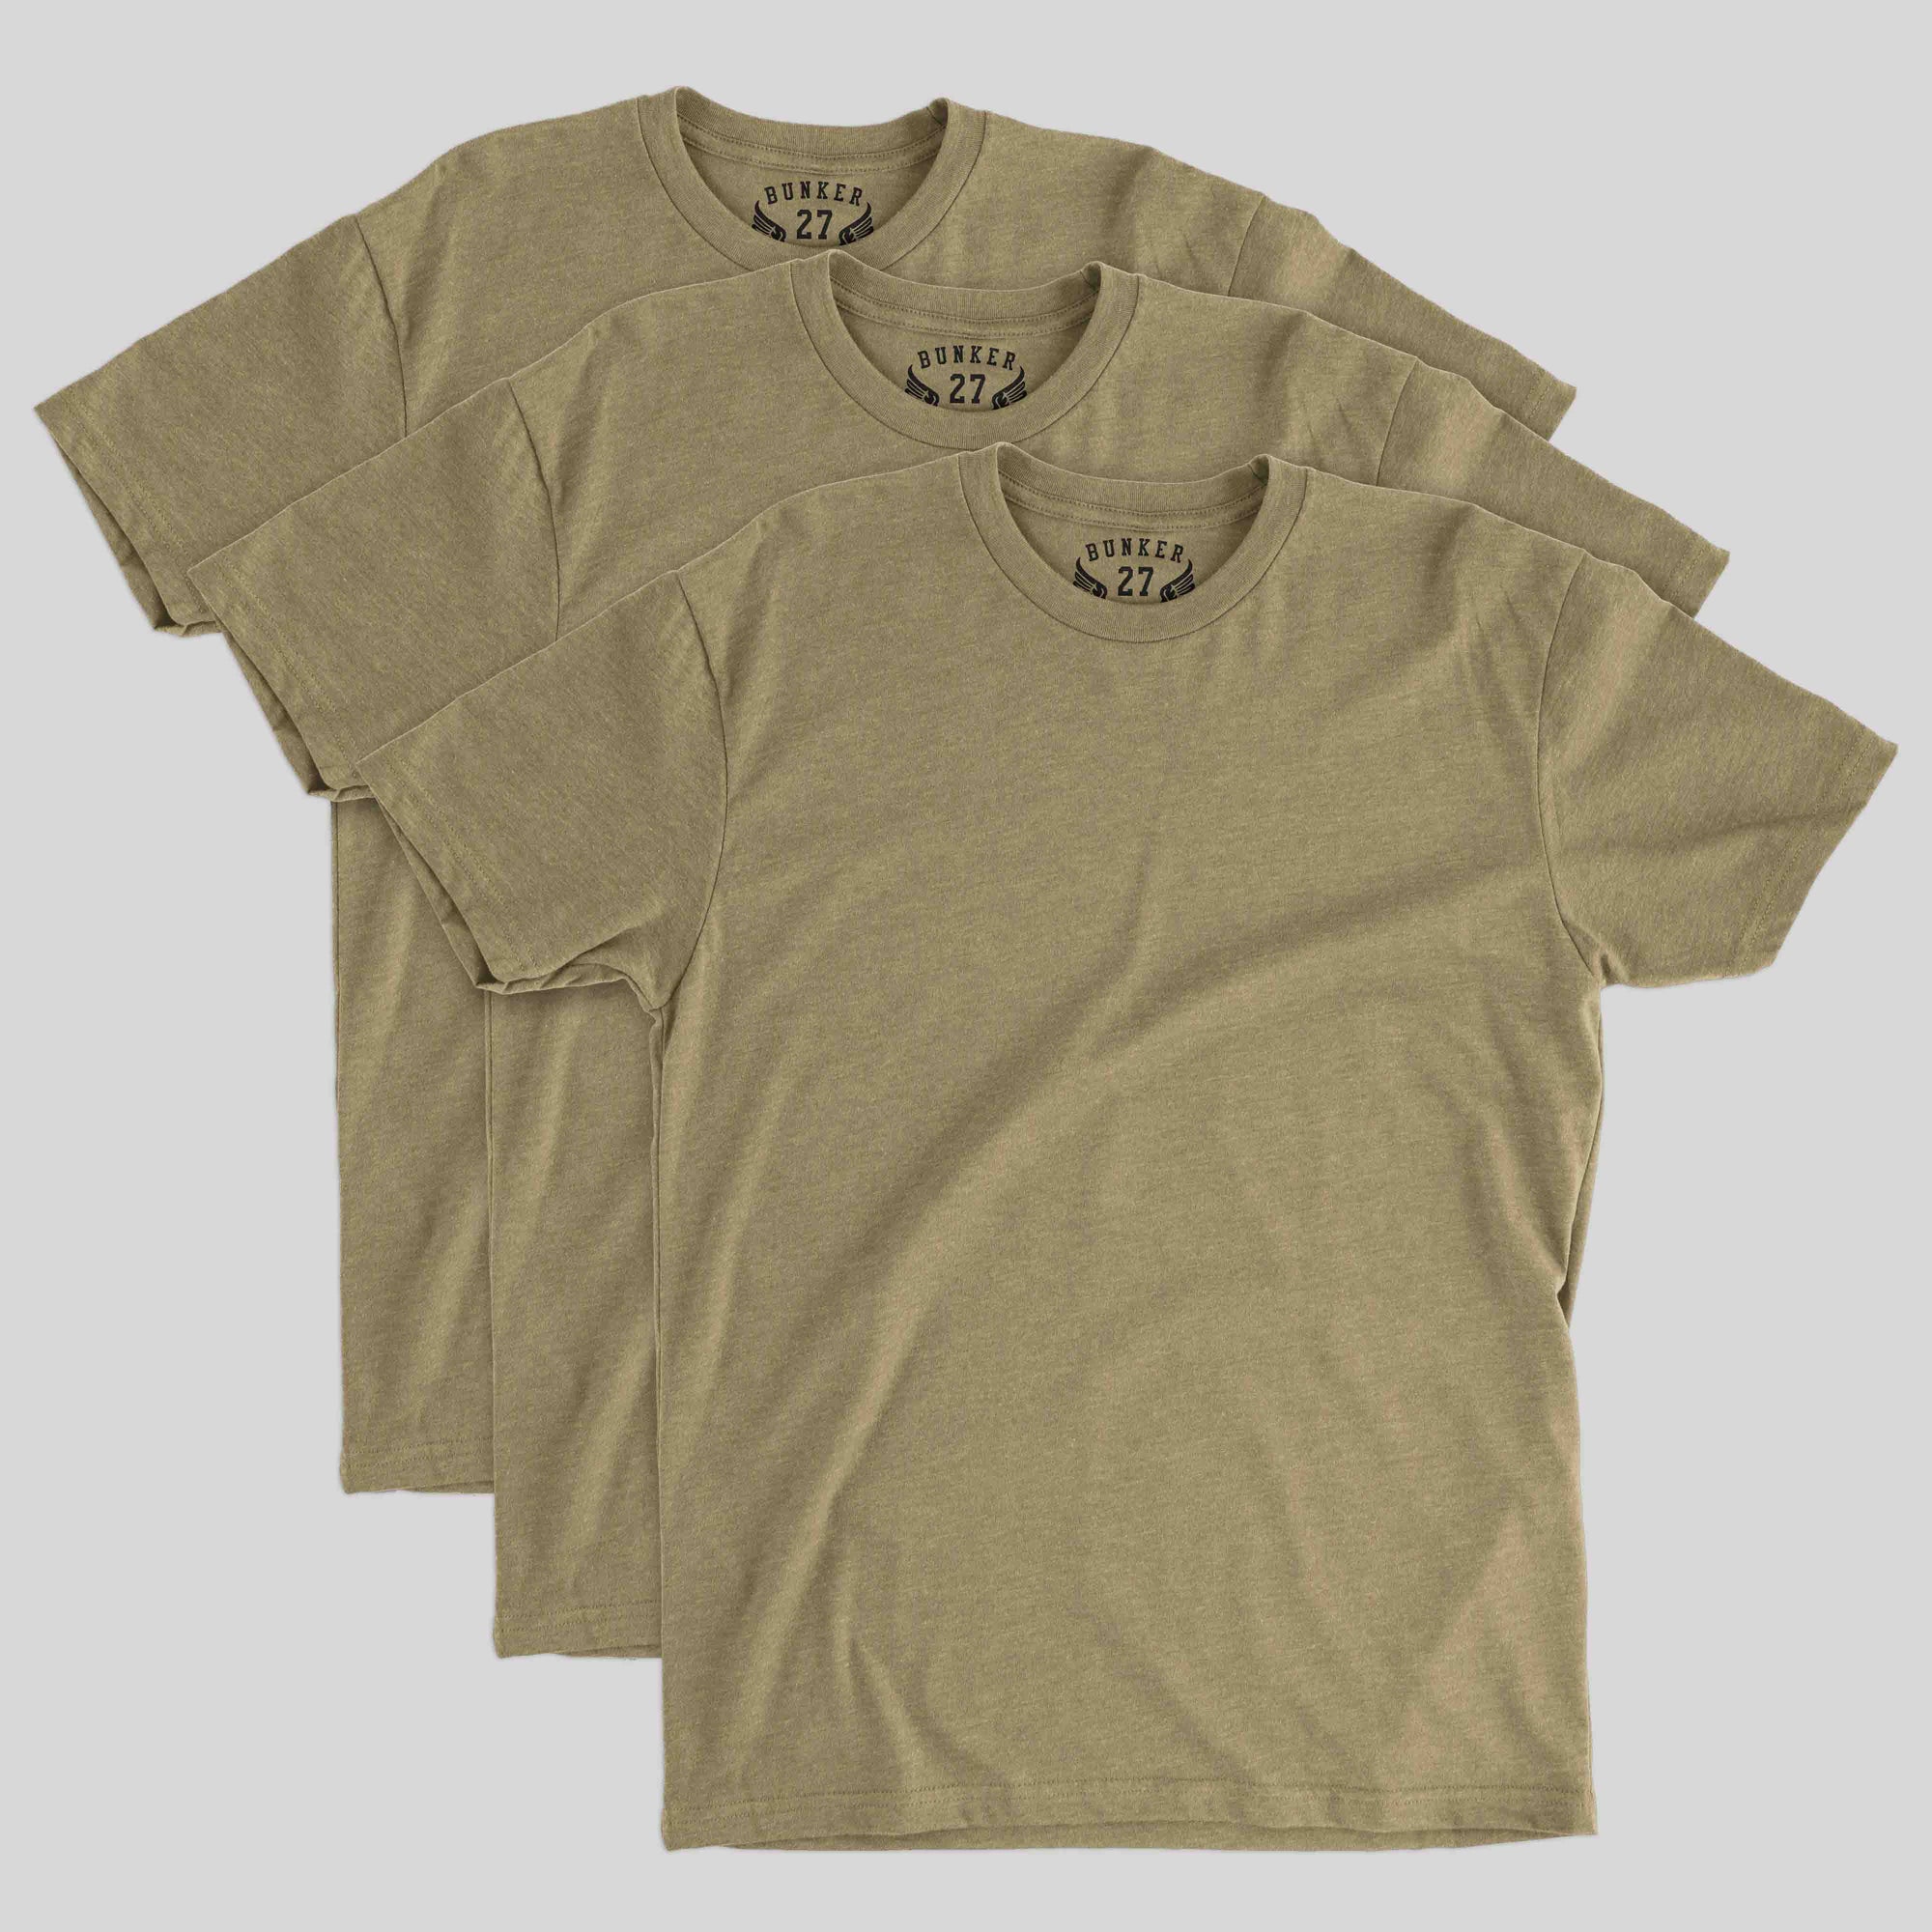 3-Pack Bunker 27 Coyote Brown T-Shirt AFI 36-2903